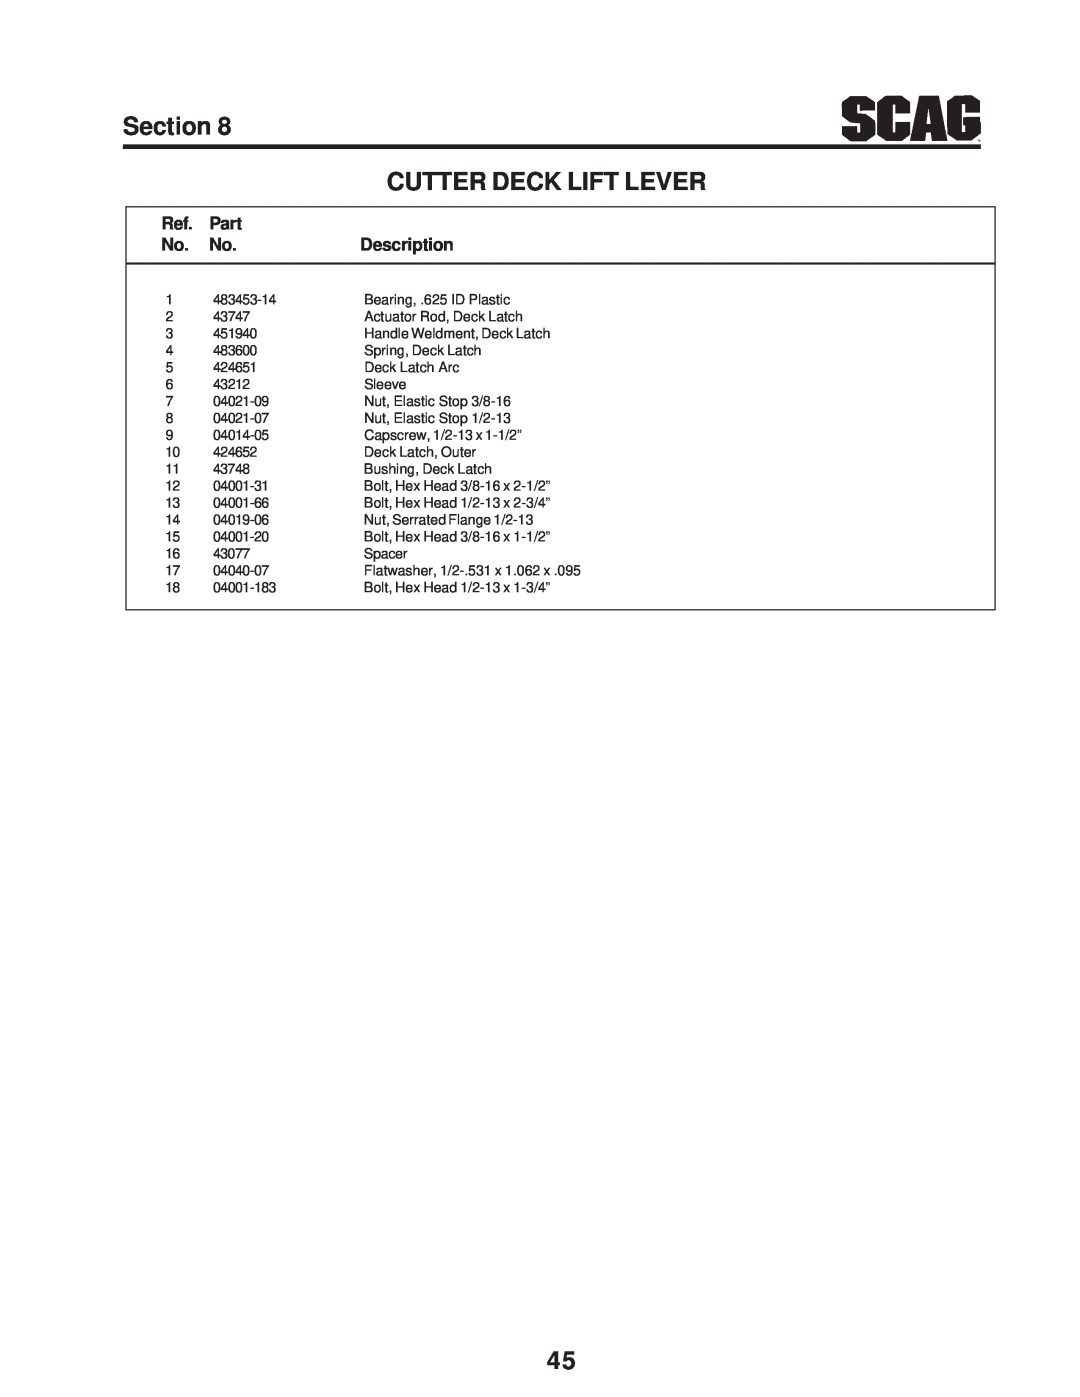 Scag Power Equipment SWZV manual Section, Cutter Deck Lift Lever, Part, Description 